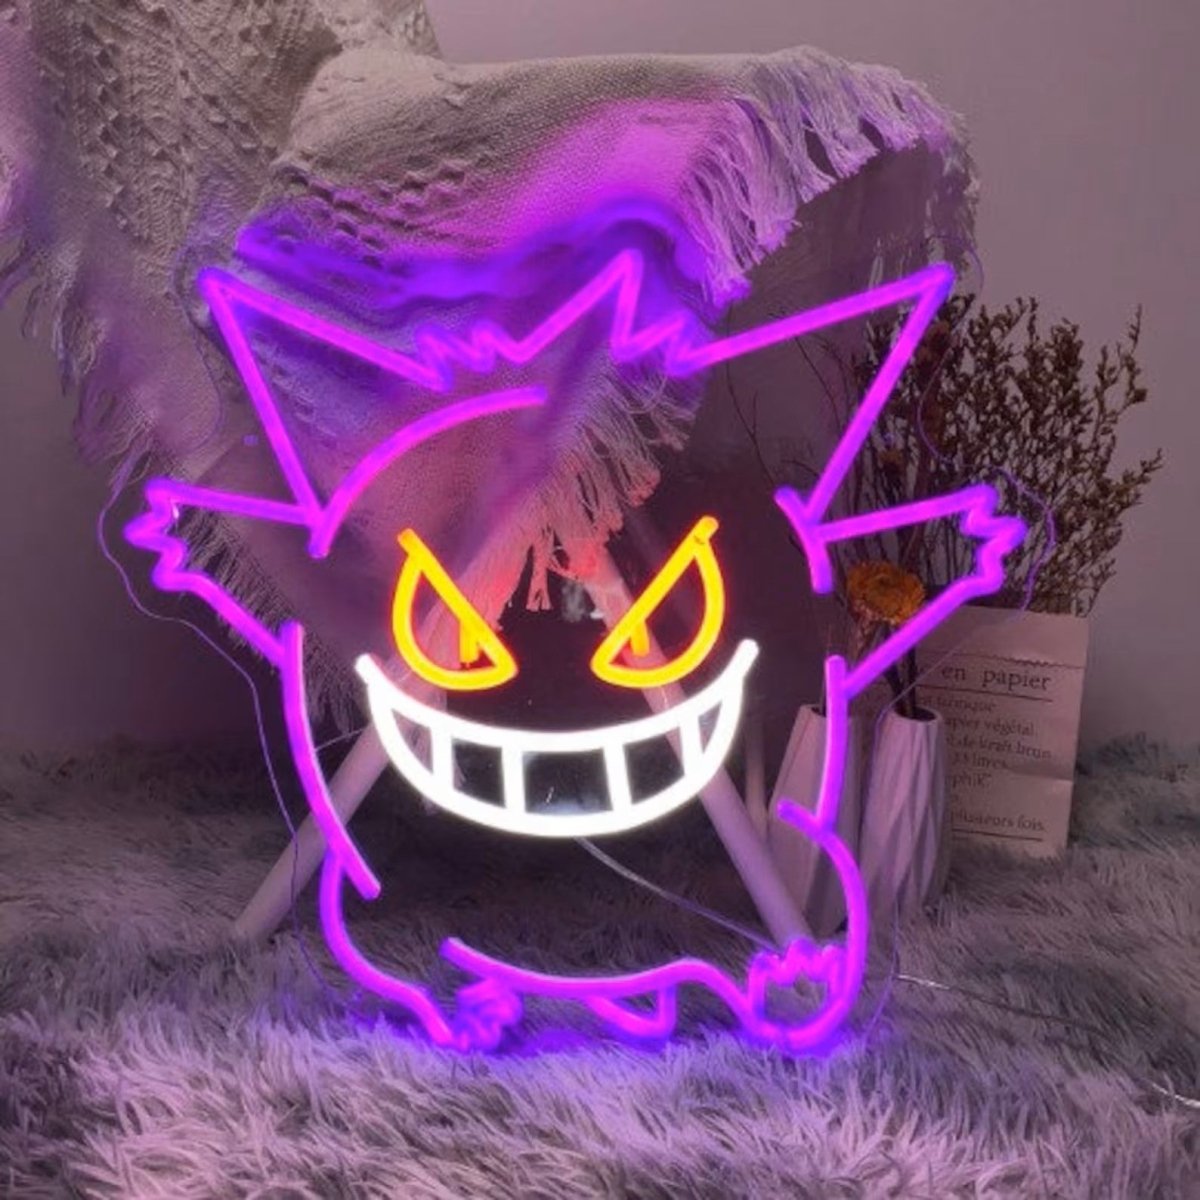 Gengar LED Sign - Pokemon Neon Signs Neon Sign